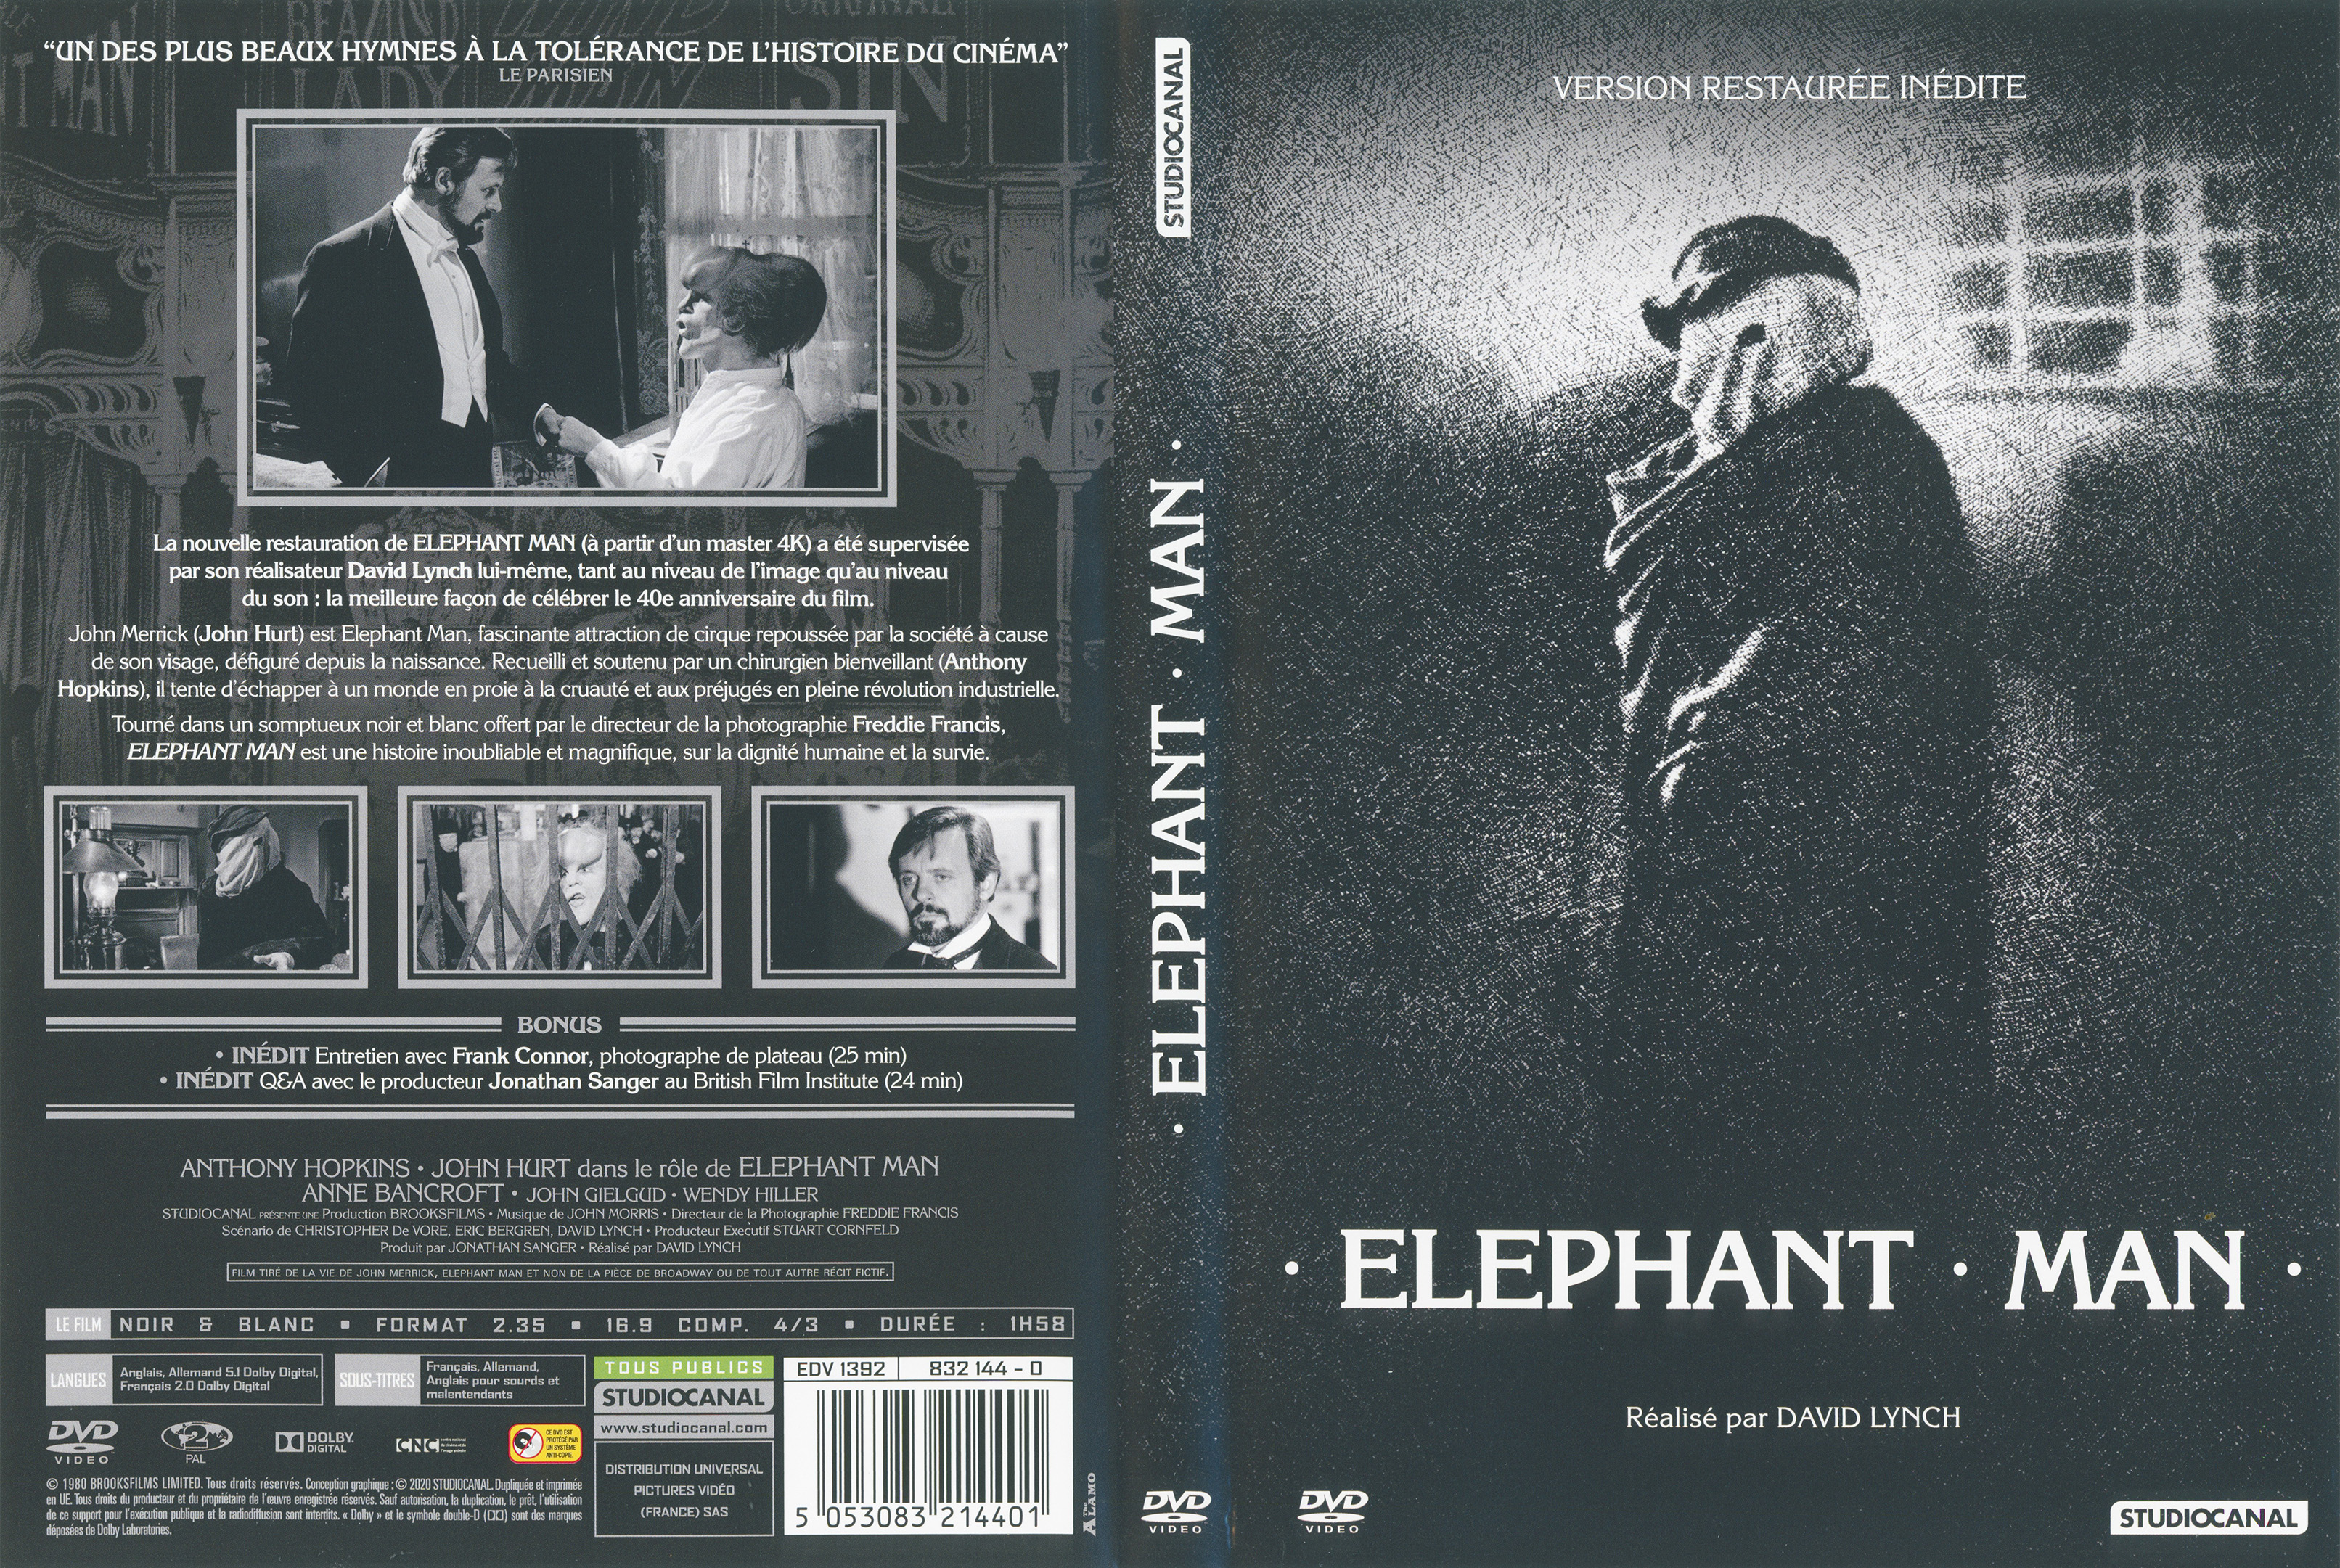 Jaquette DVD Elephant man v4